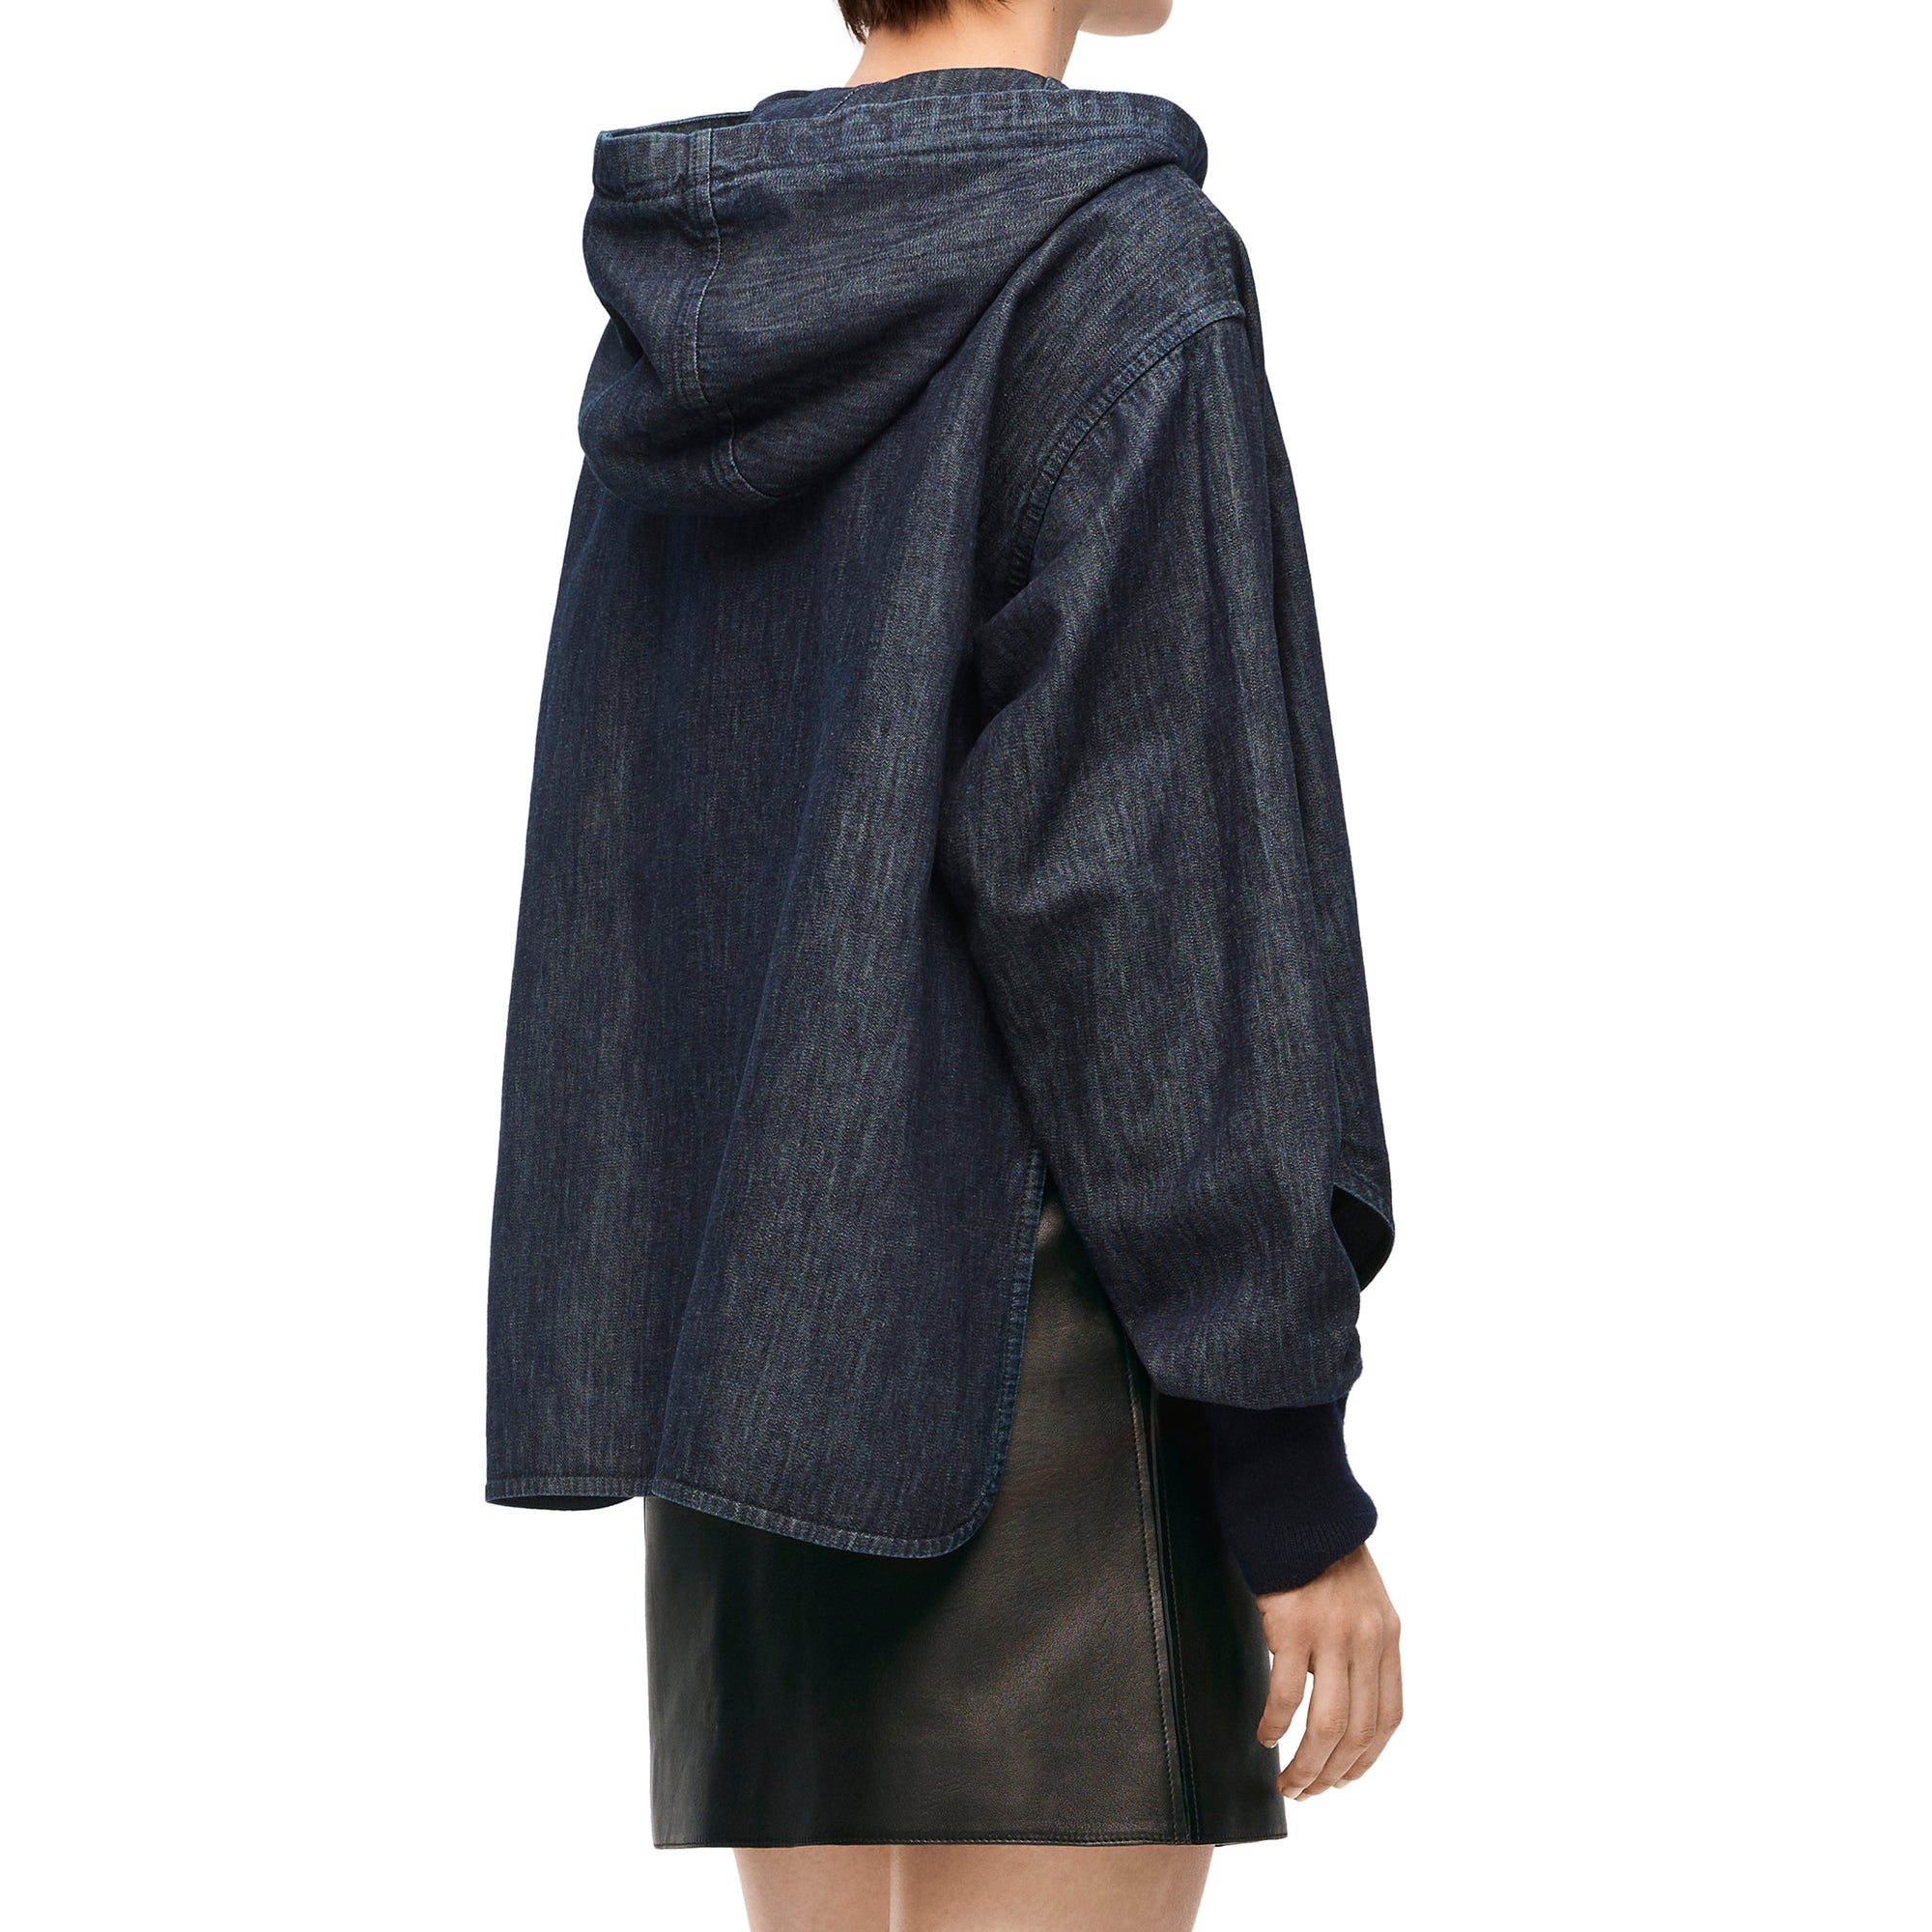 Loewe - Women’s Hooded Jacket - (Indigo) view 4